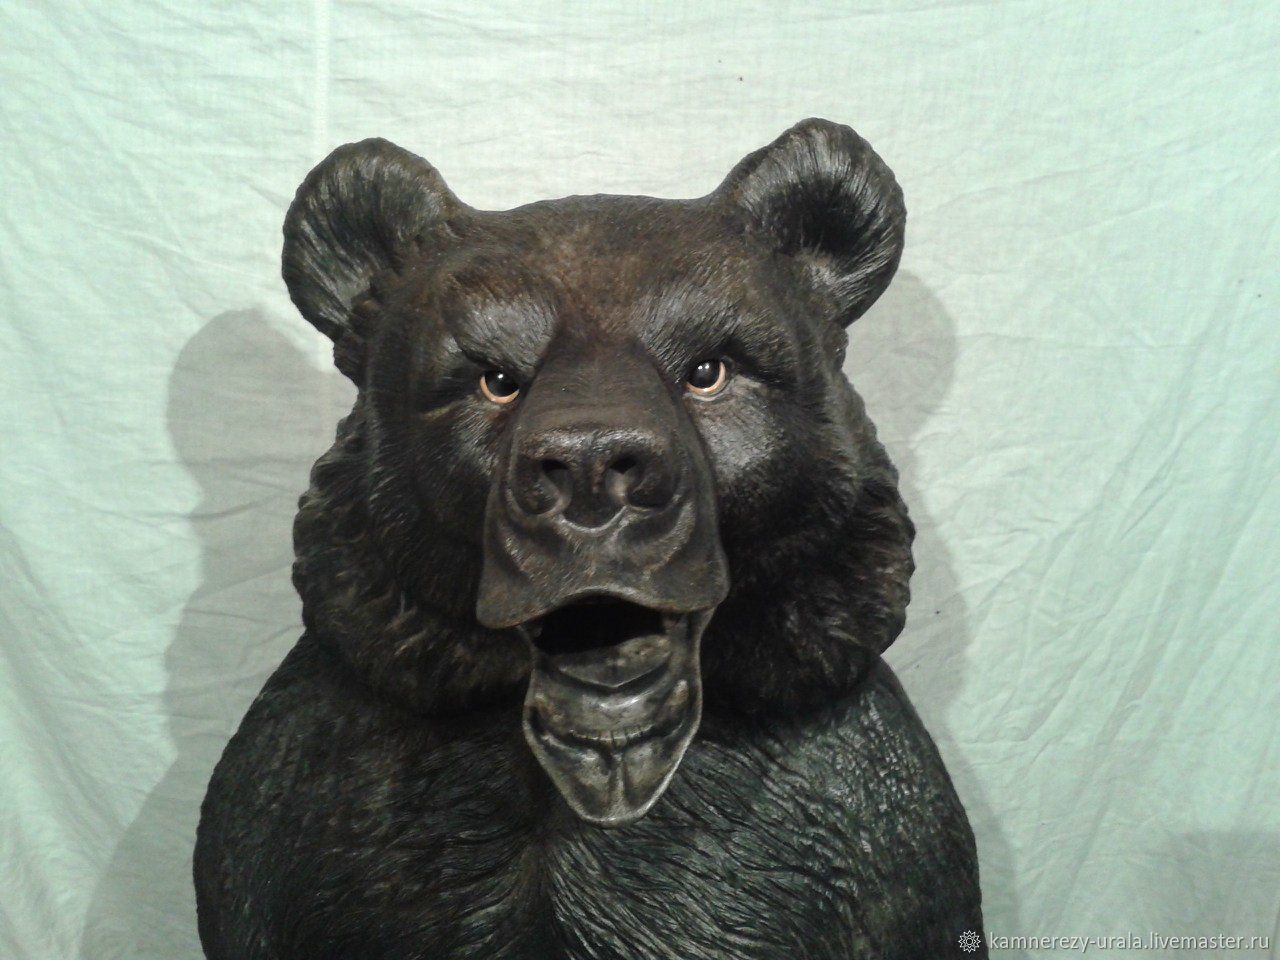 Bear stone. Медведь из камня. Мишка из камней. Медведи из камней Урала. Сувениры из камня медведь Урал.